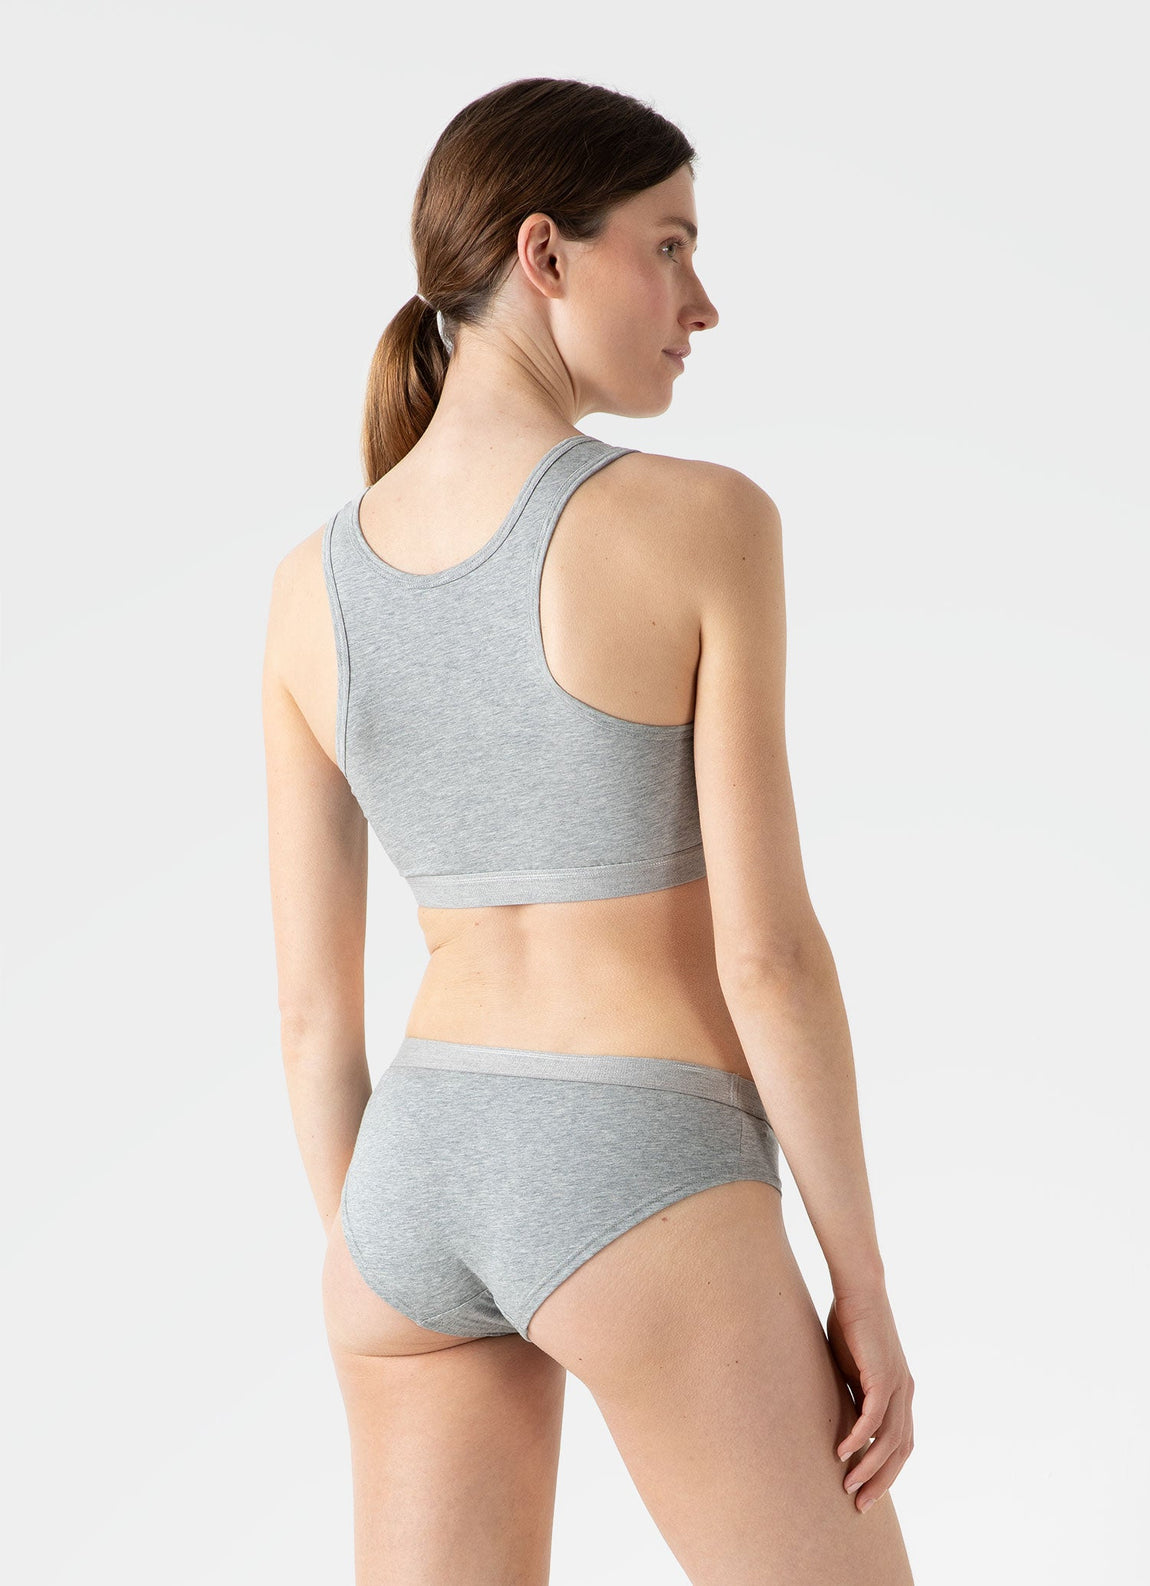 Underwear set 2 hipster brief  Made in Canada women's lingerie